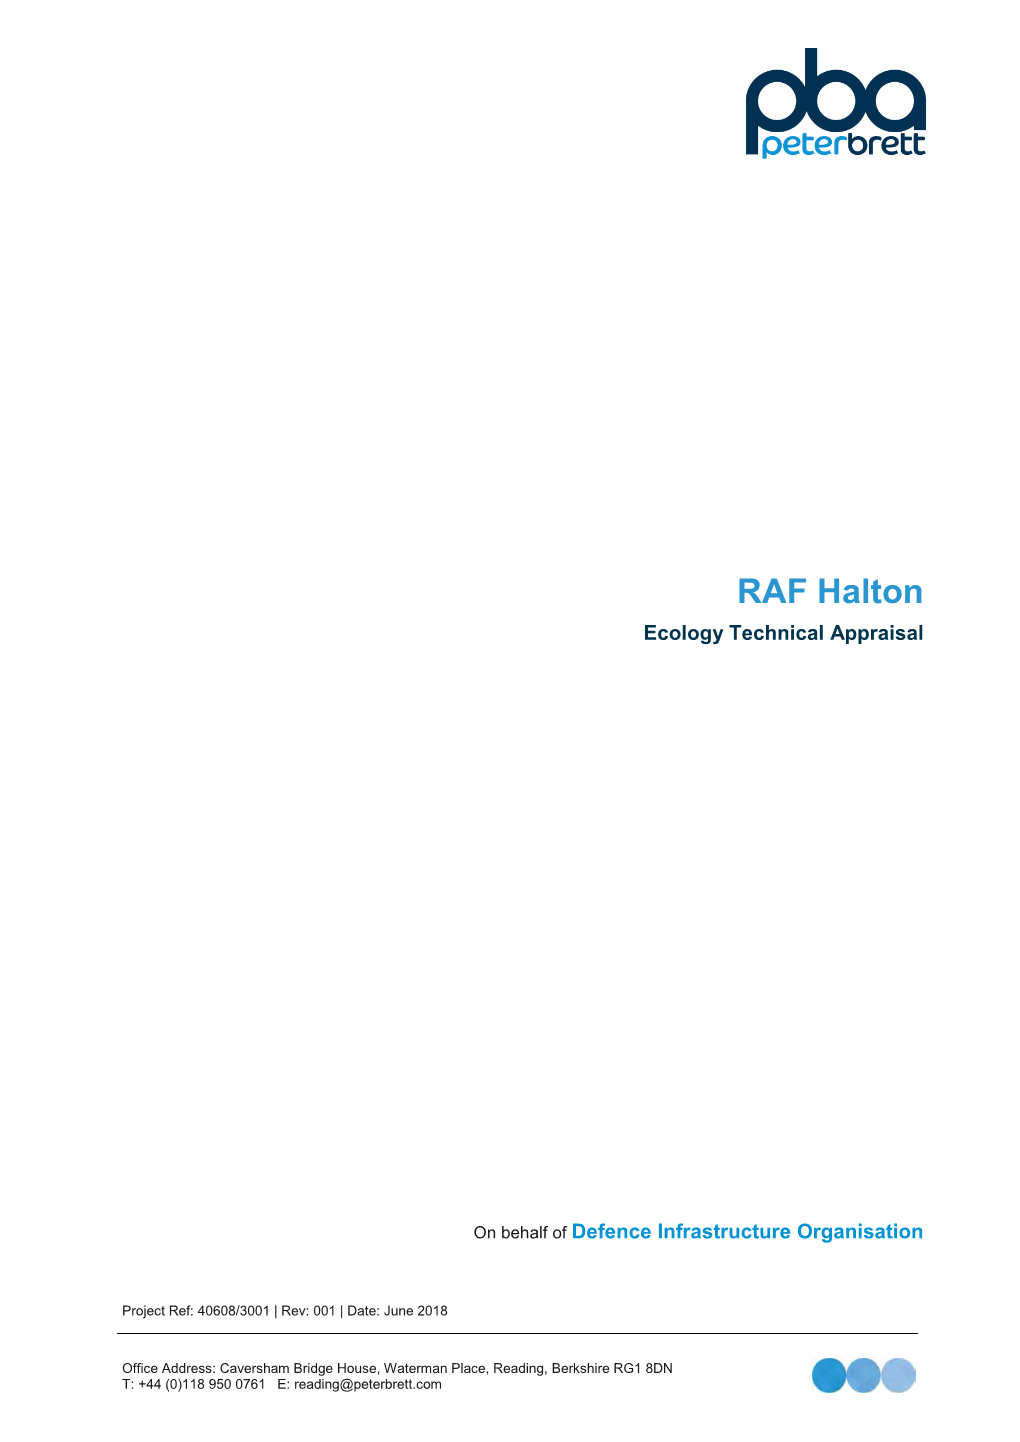 RAF Halton Ecology Technical Appraisal